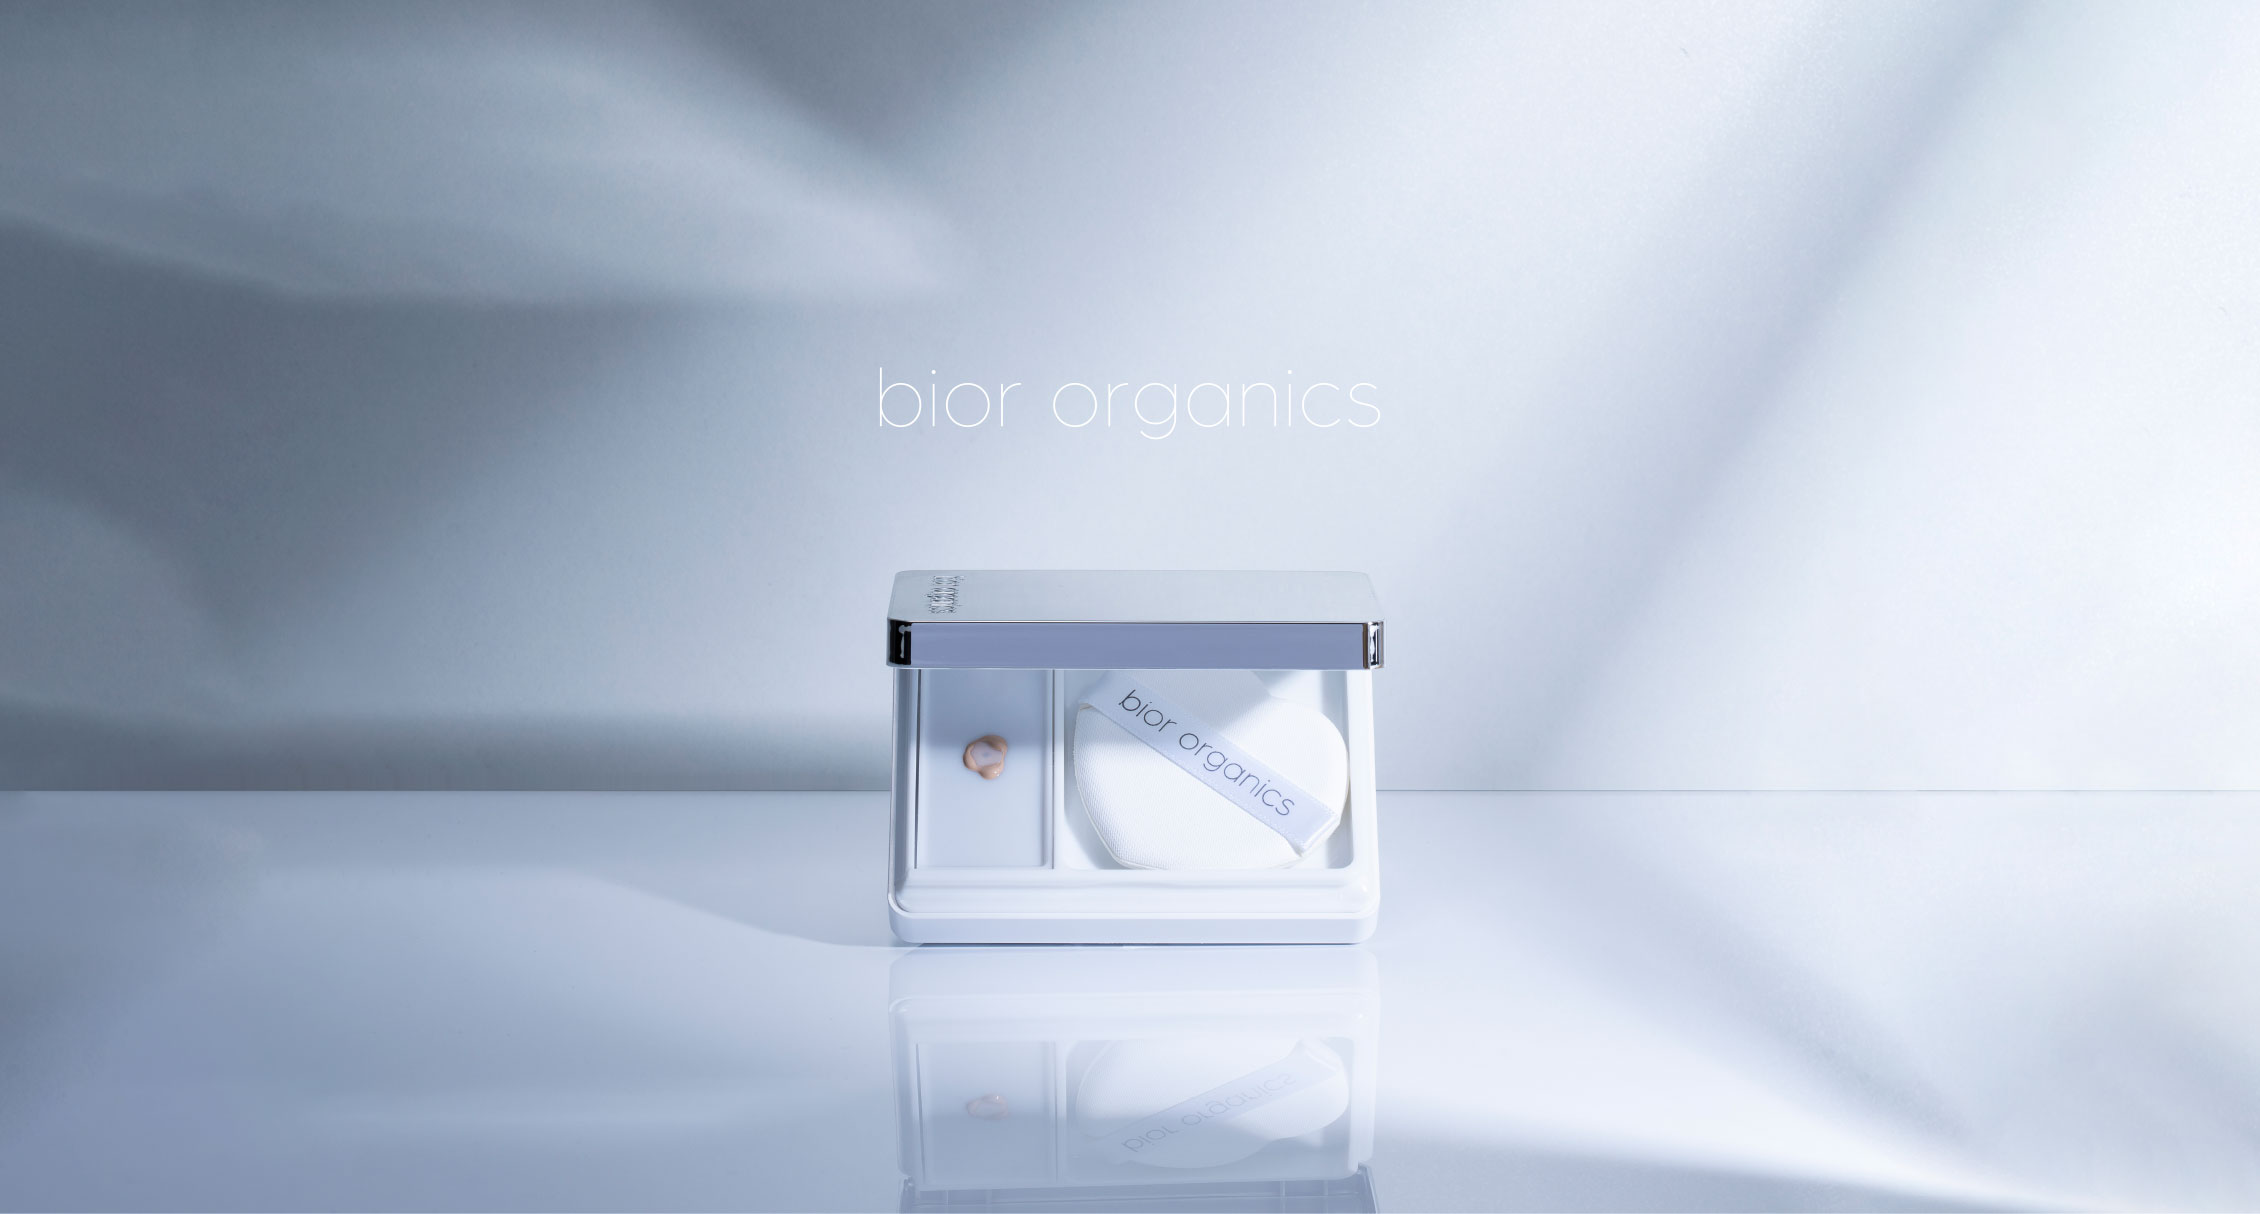 bior organics